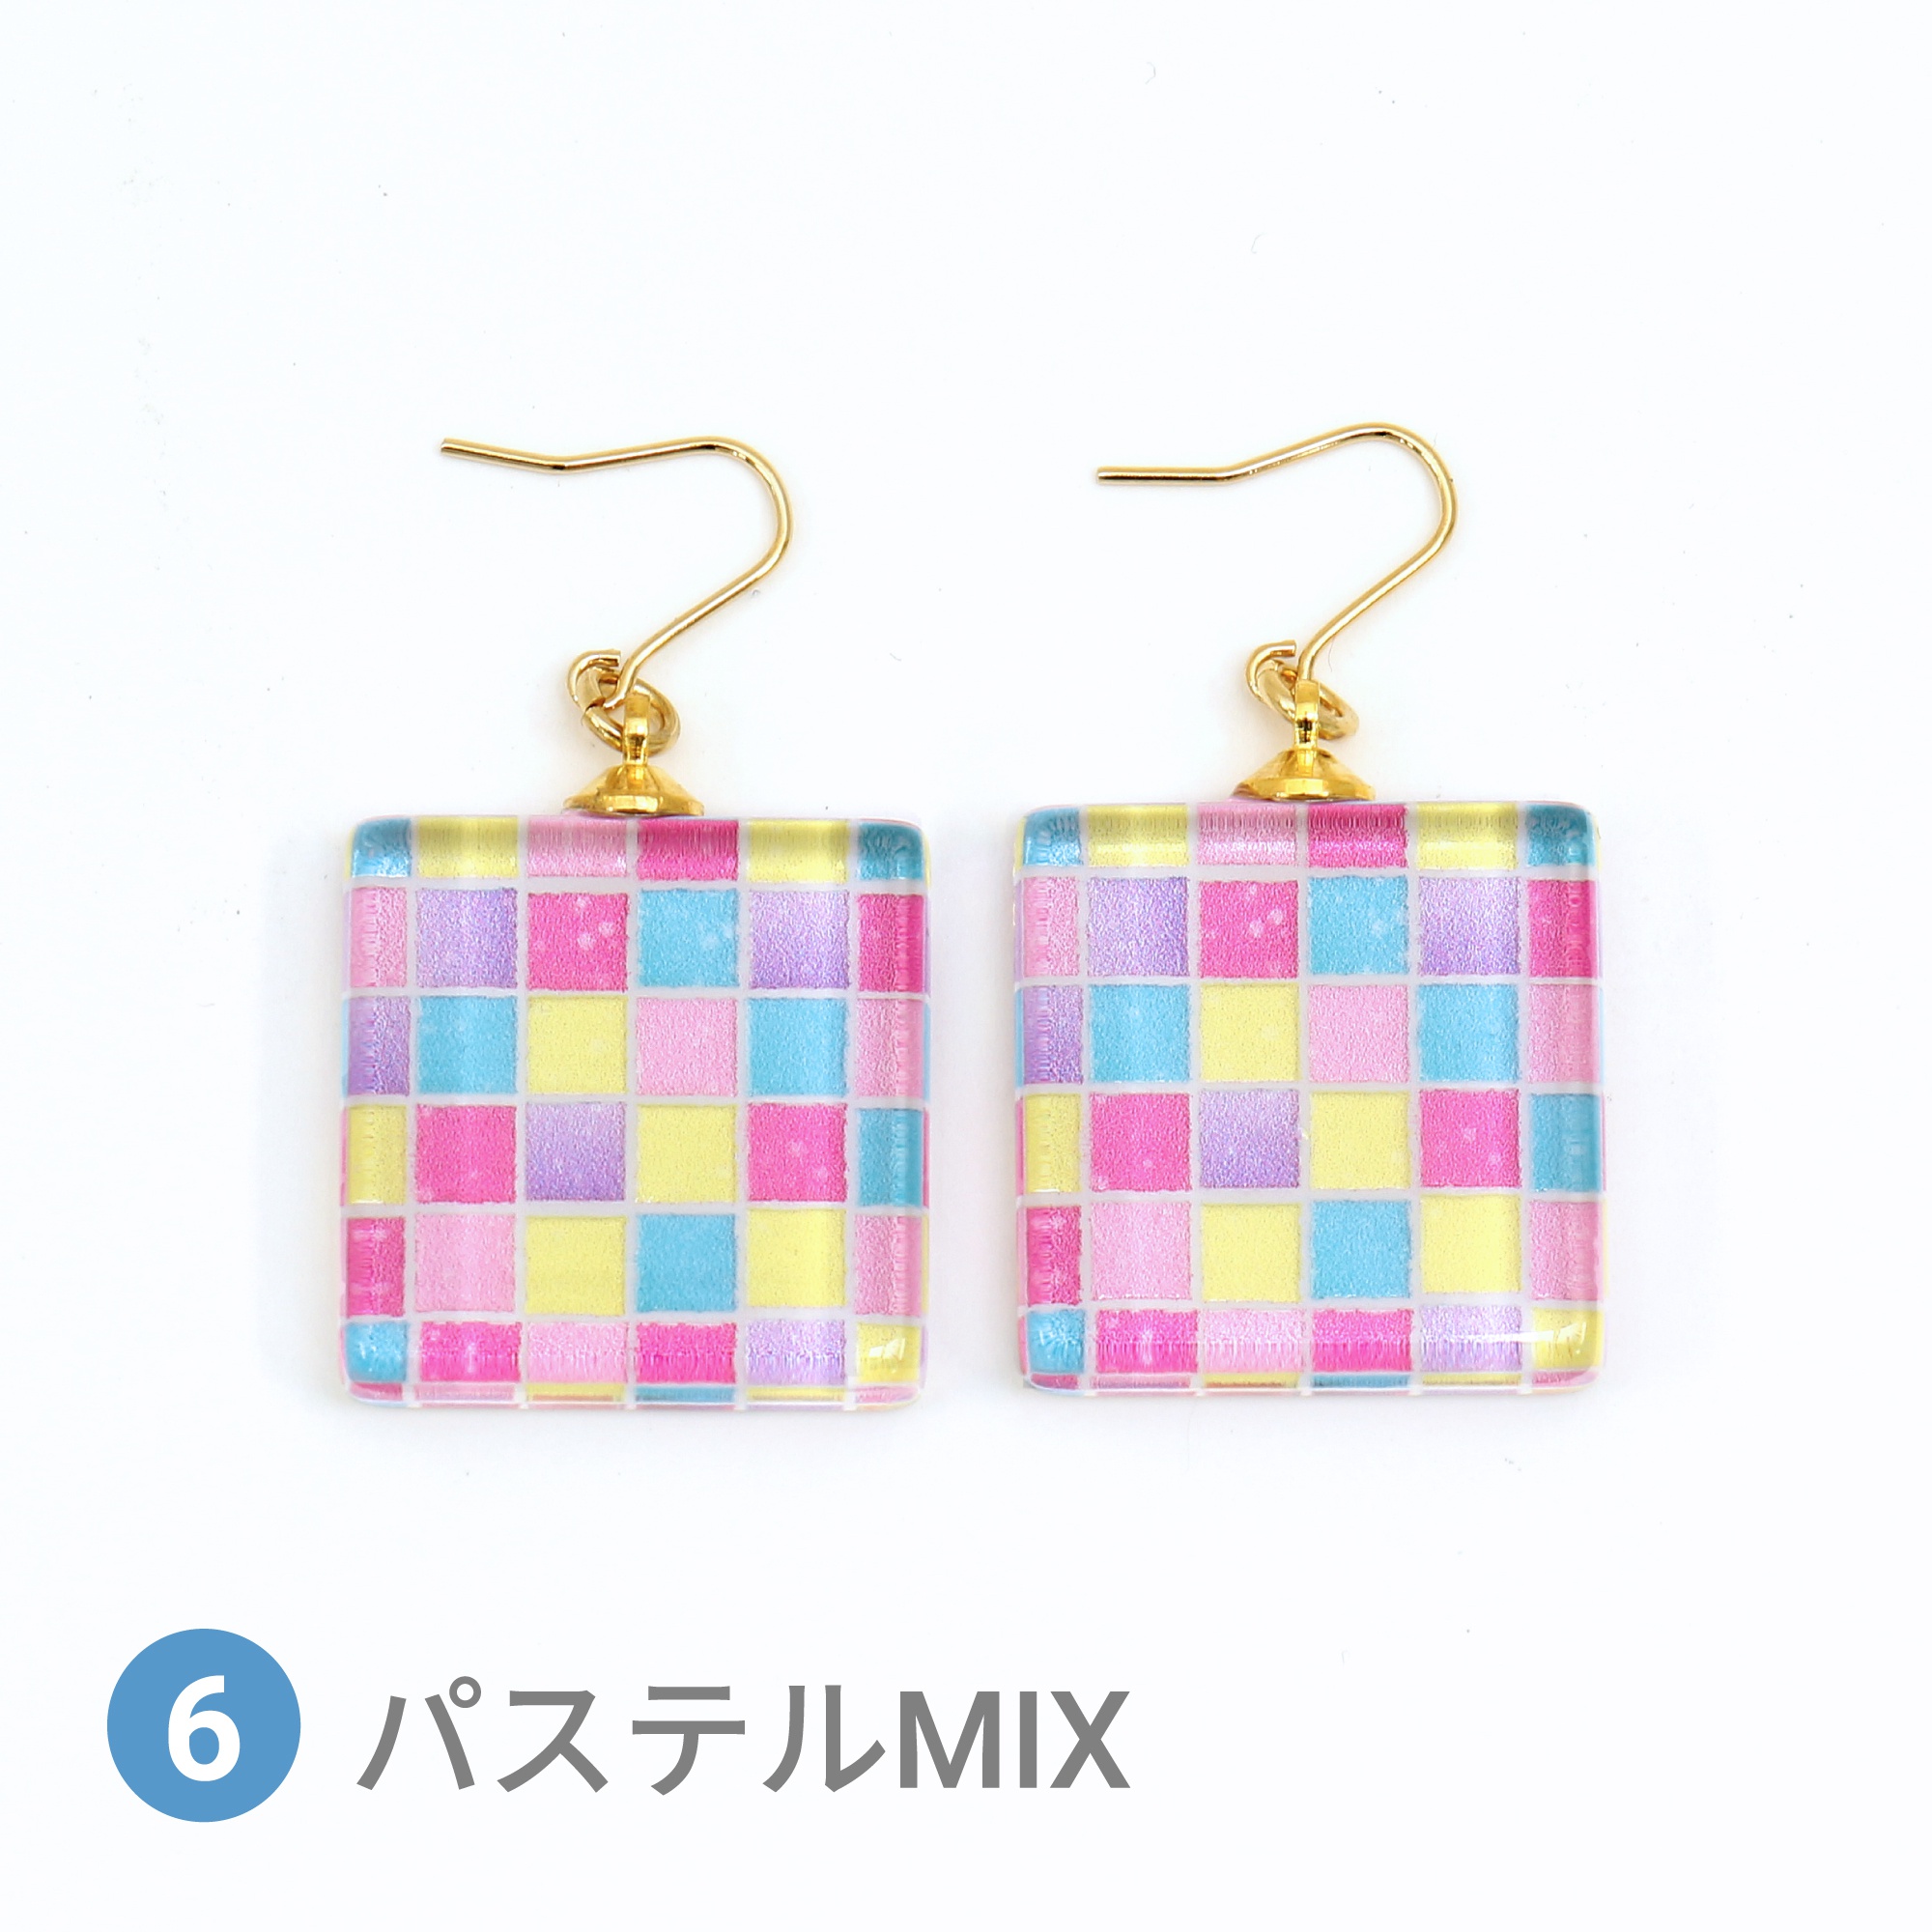 Glass accessories Pierced Earring TILE pastel mix square shape